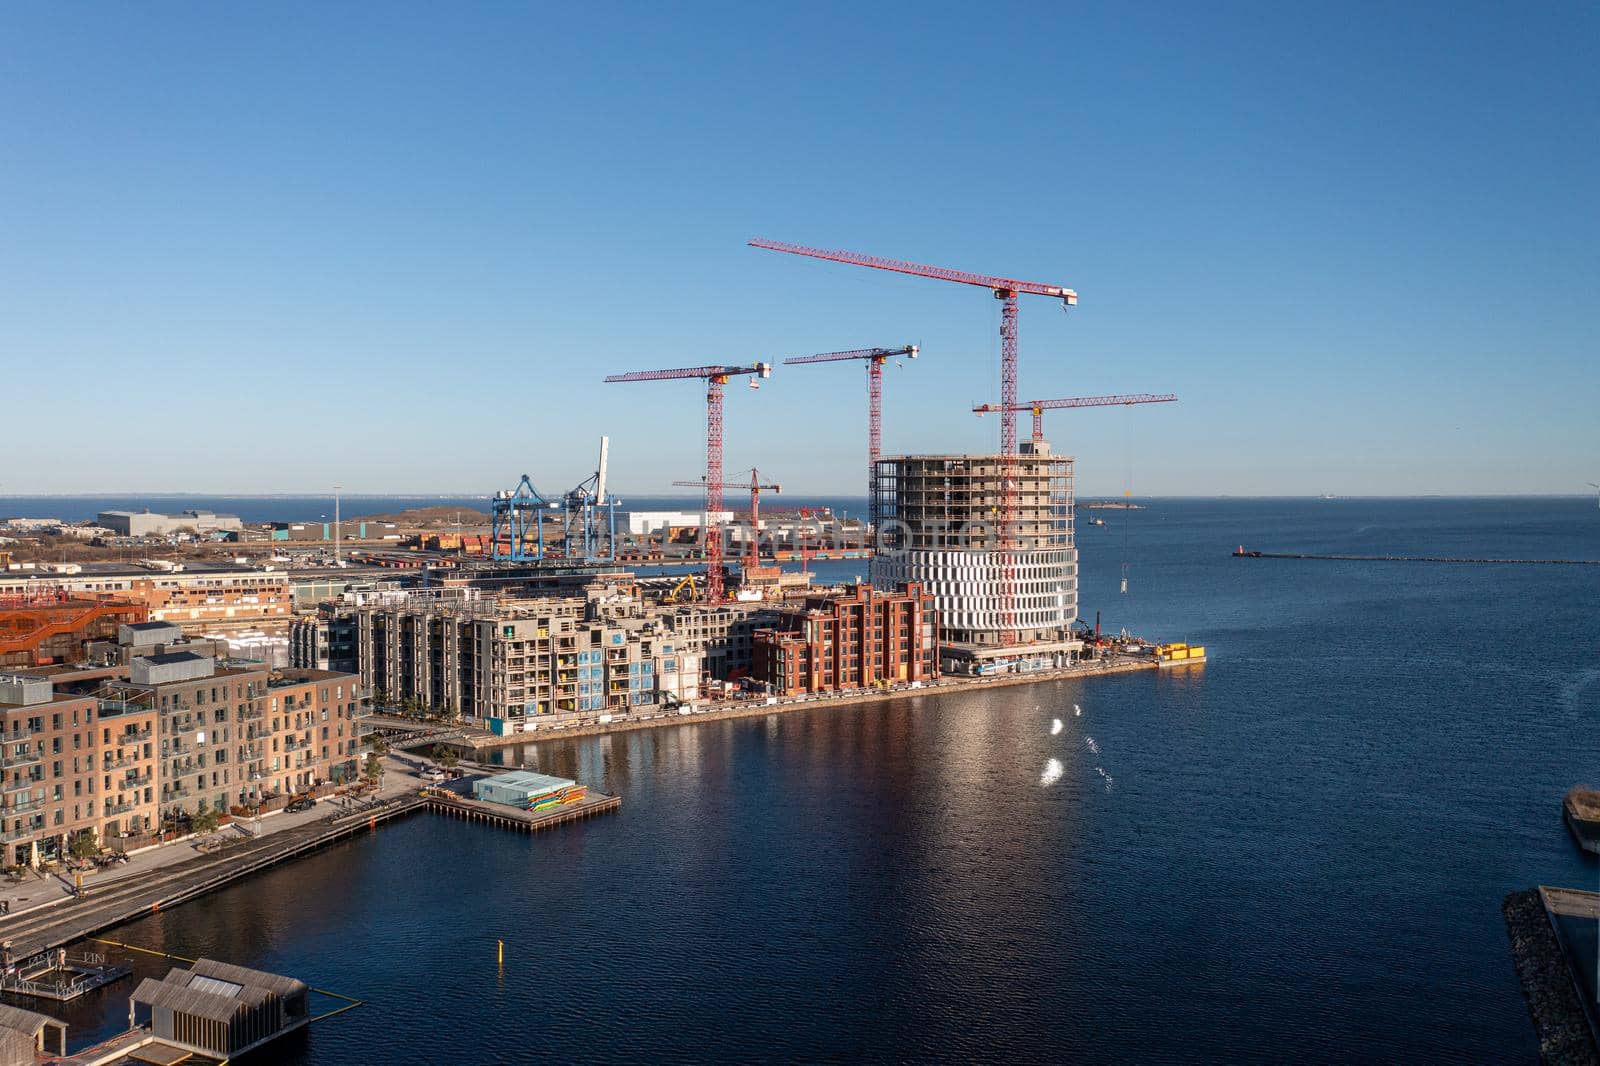 Tip of Redmolen Construction Site in Copenhagen, Denmark by oliverfoerstner